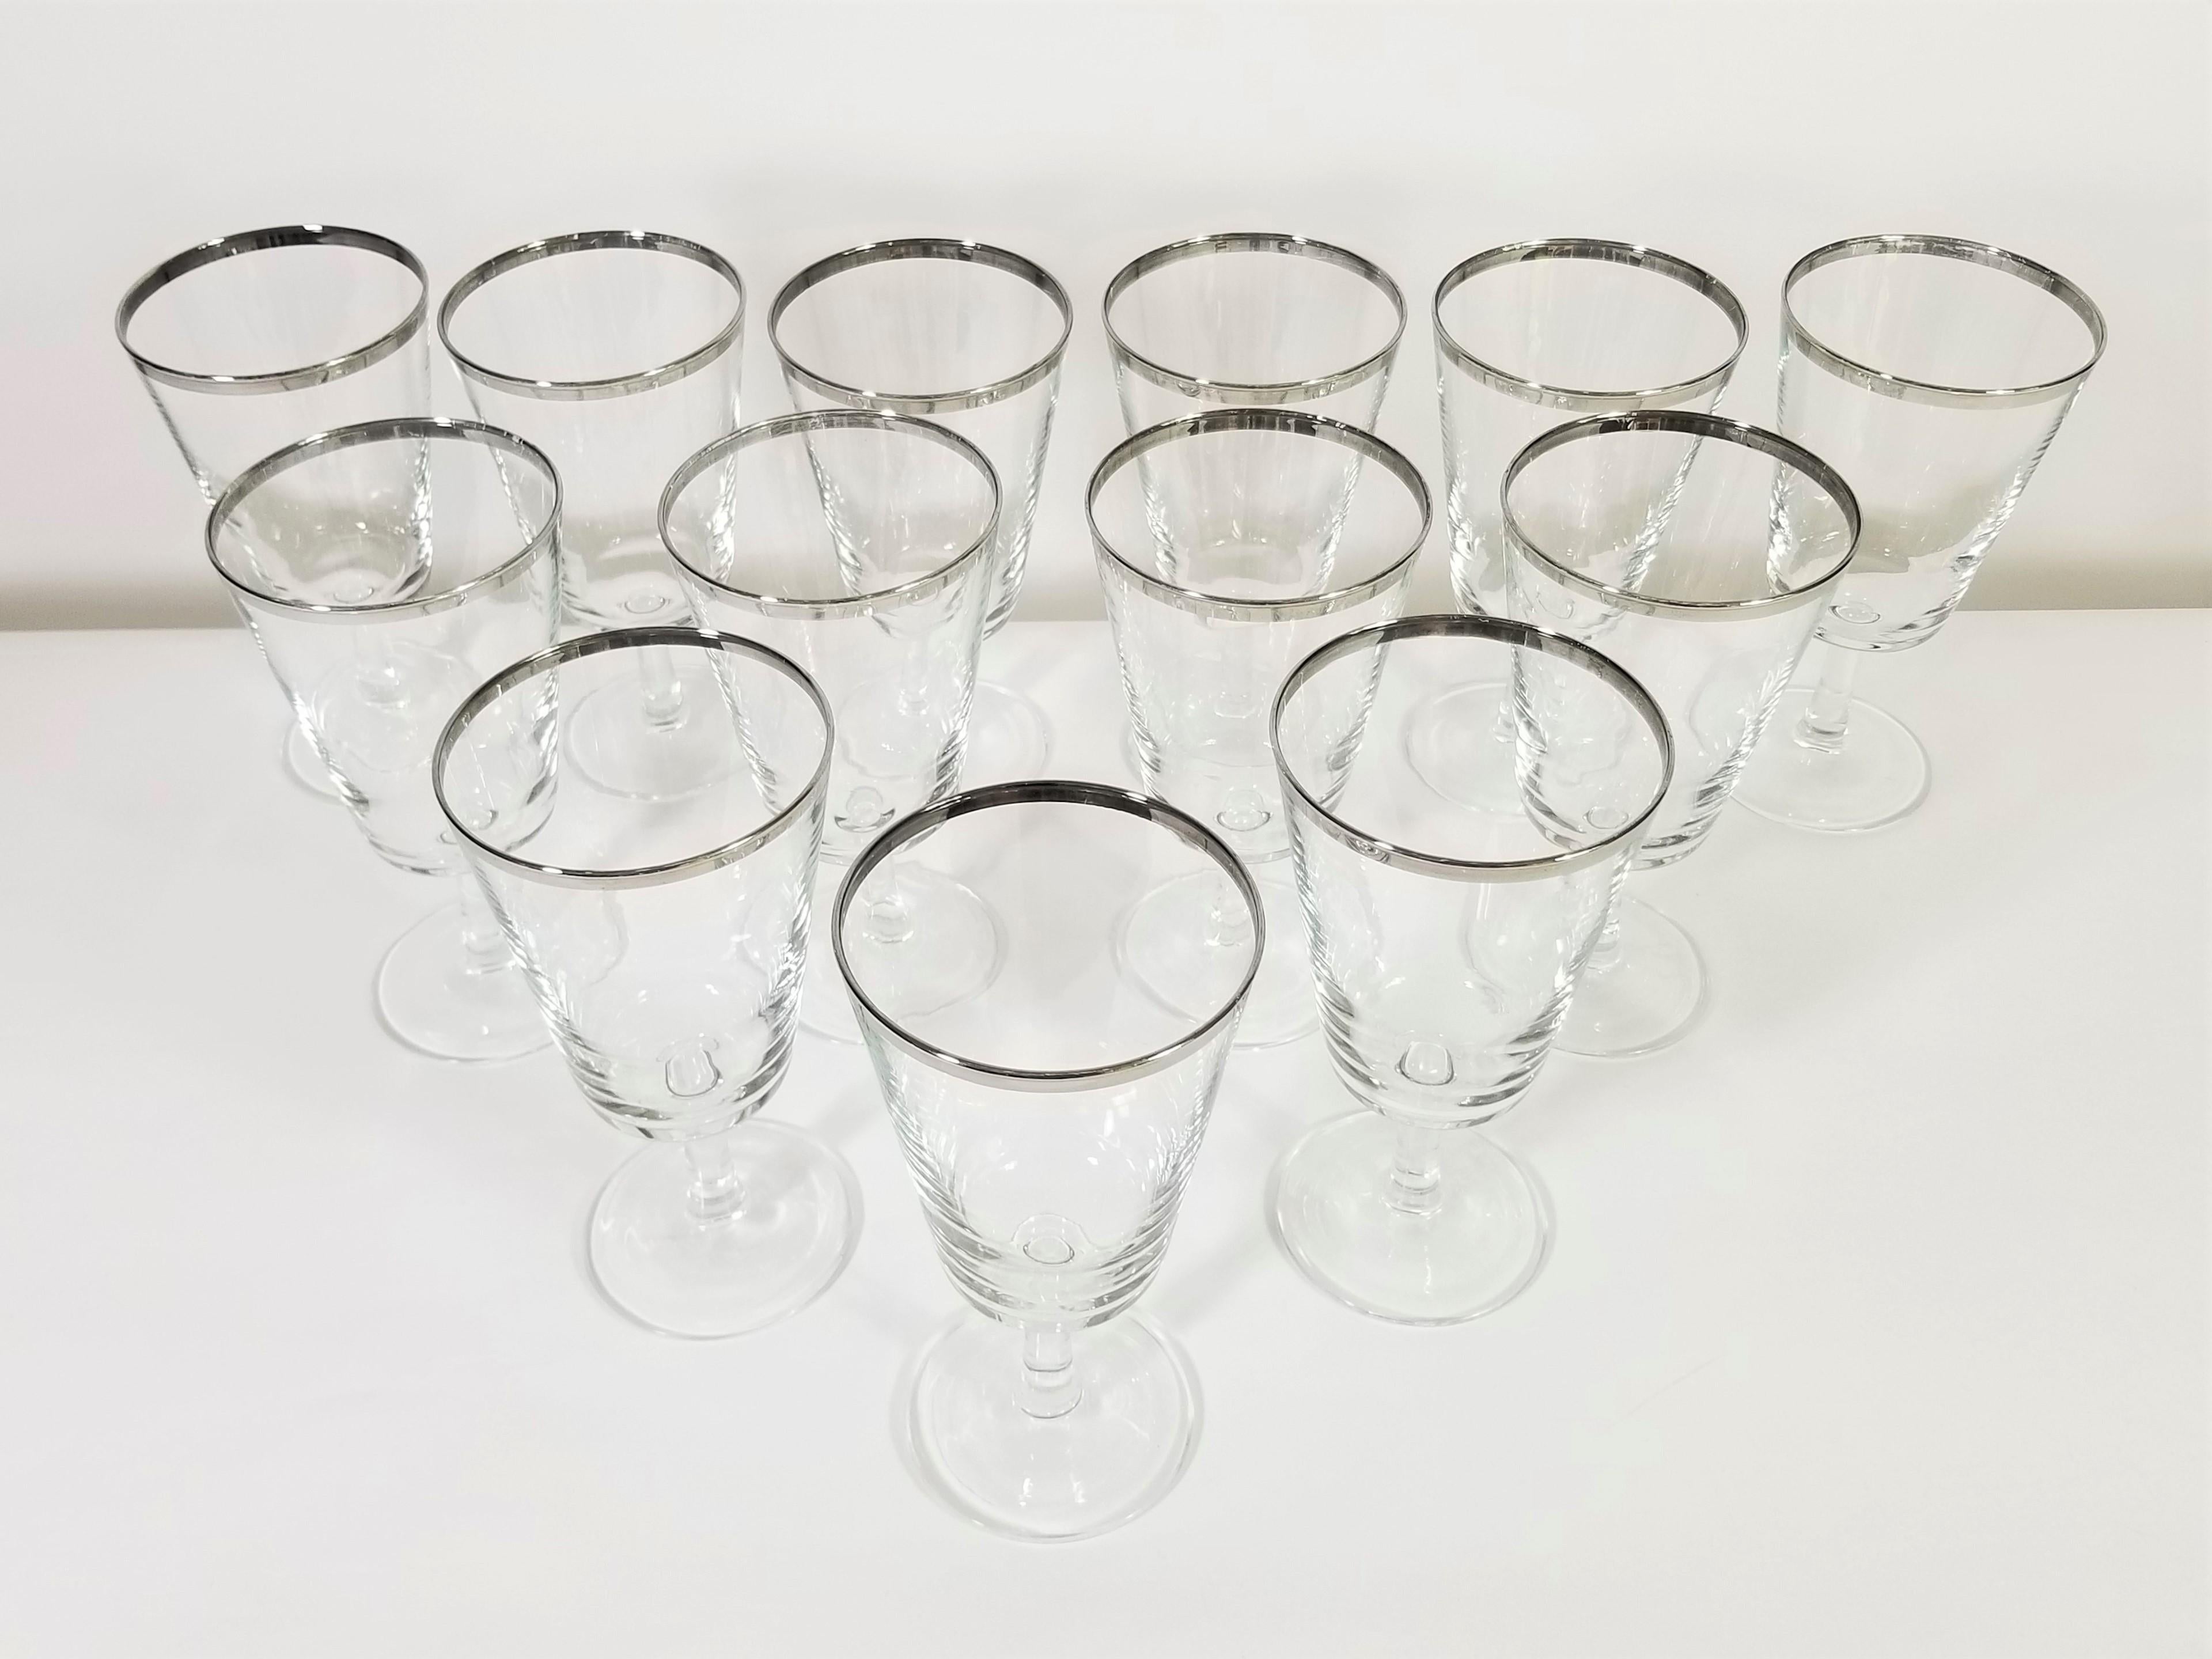 Elegant midcentury crystal stemware/ goblets. Silver rimmed. Made in France. All glasses marked France on bottom. 13 glasses. Excellent condition.